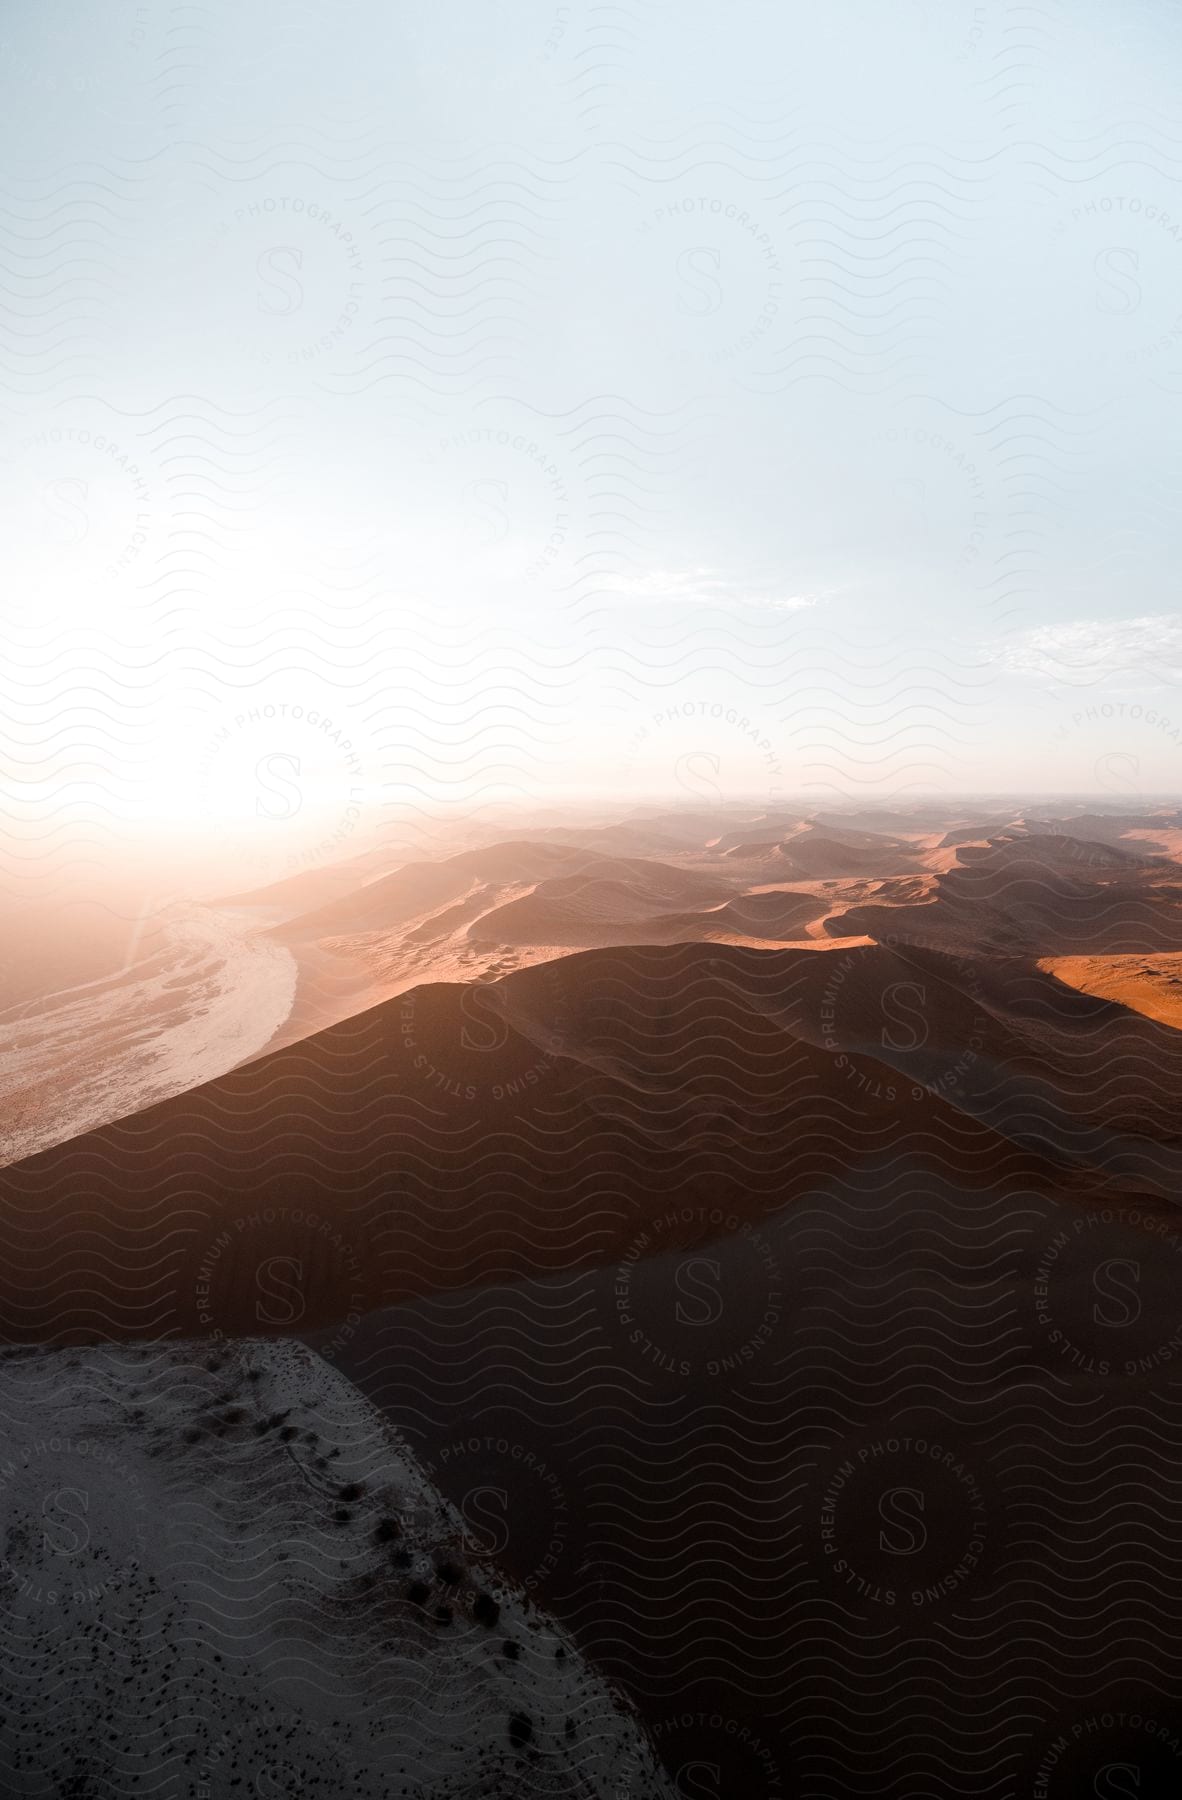 A desert dune at dusk with a cloudy sky